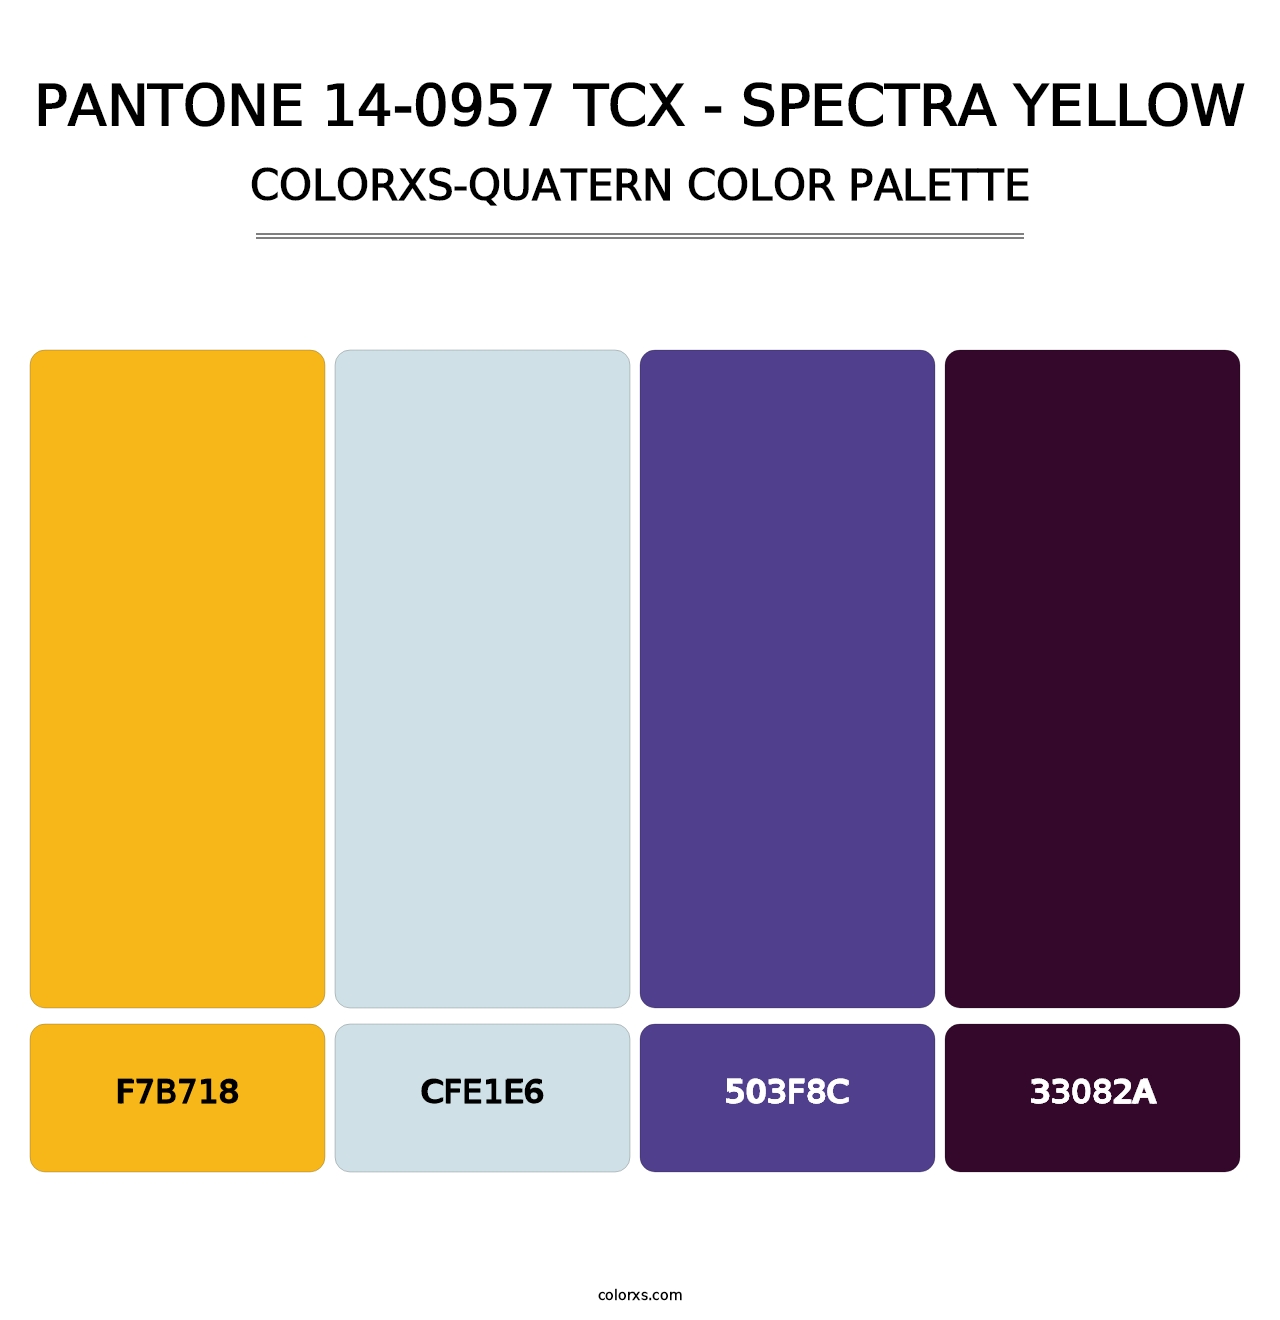 PANTONE 14-0957 TCX - Spectra Yellow - Colorxs Quatern Palette